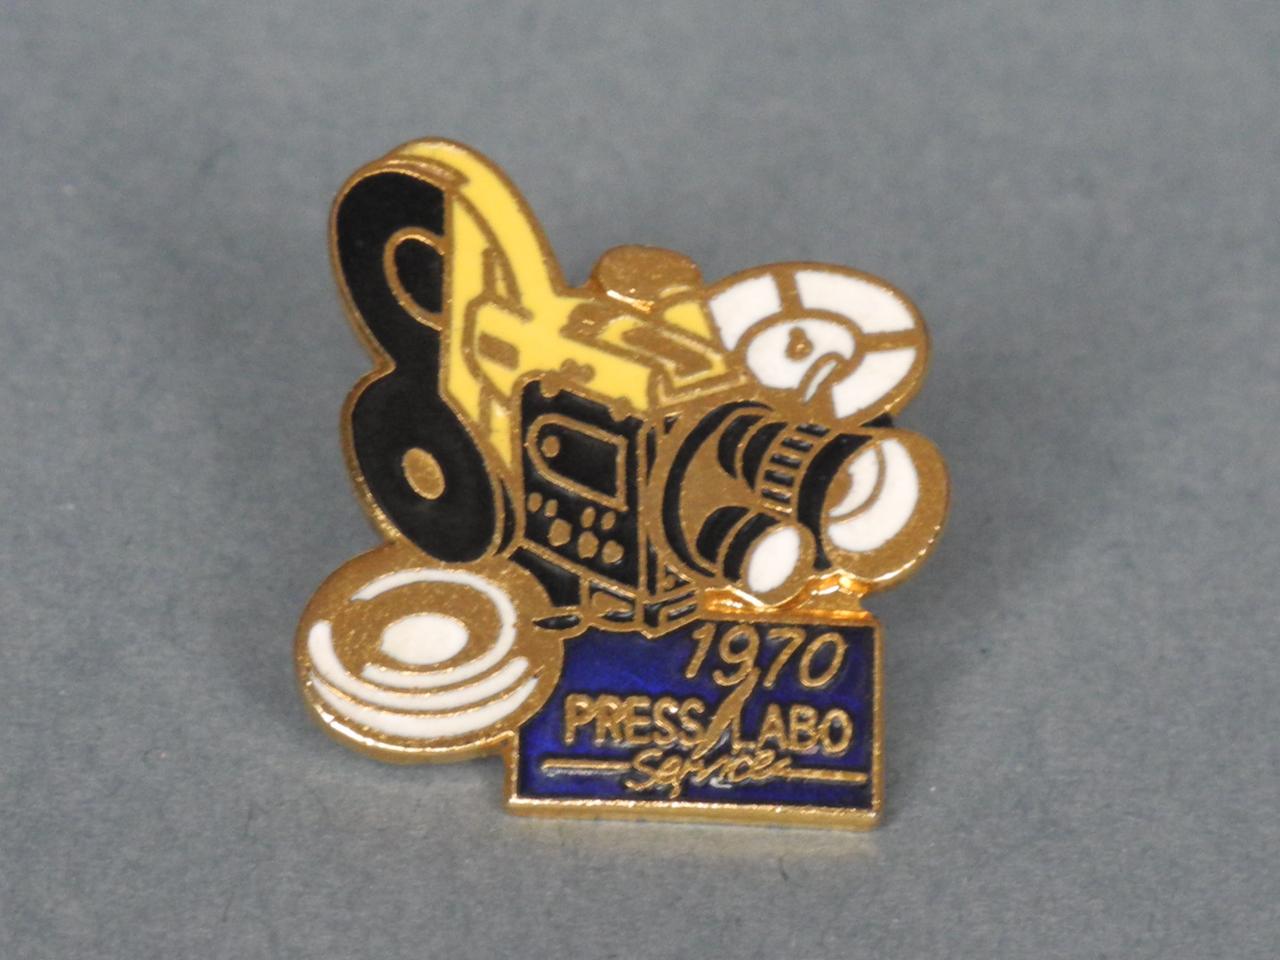 *Pin's Press-Labo service*